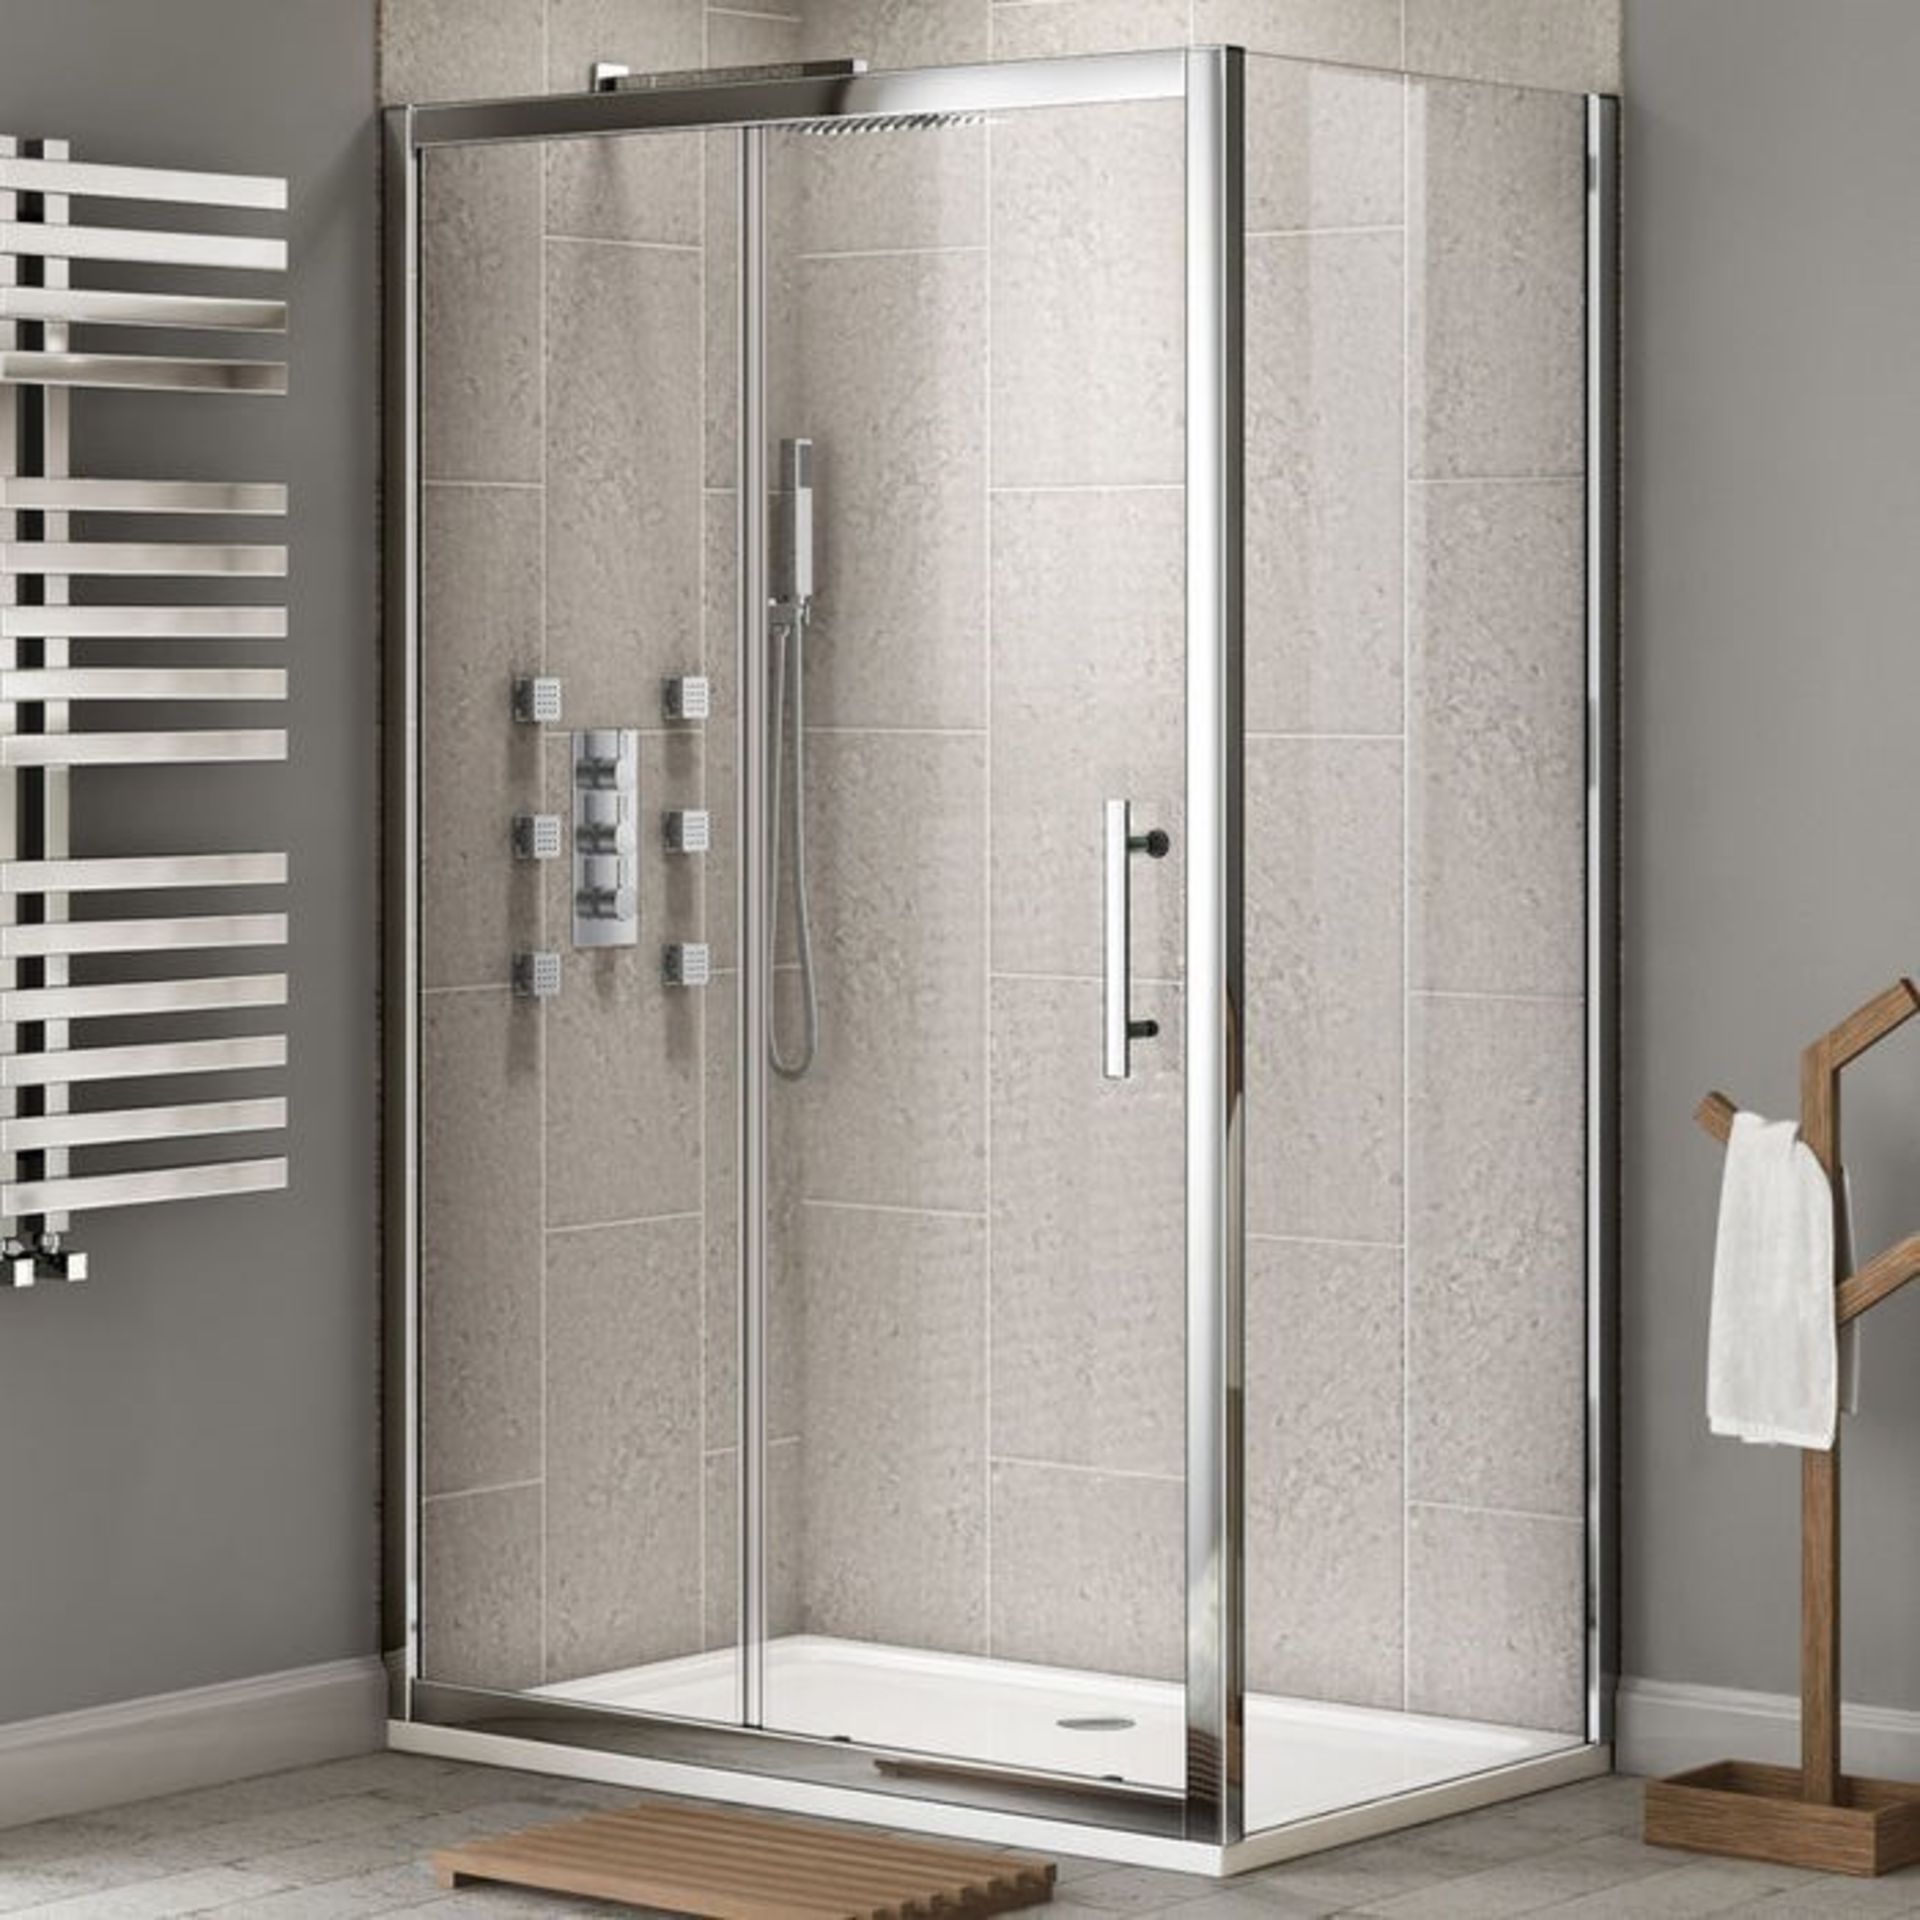 NEW (E12) Twyfords 1700x900mm - Premium EasyClean Sliding Door Shower Enclosure. RRP £549.99.8... - Image 3 of 3